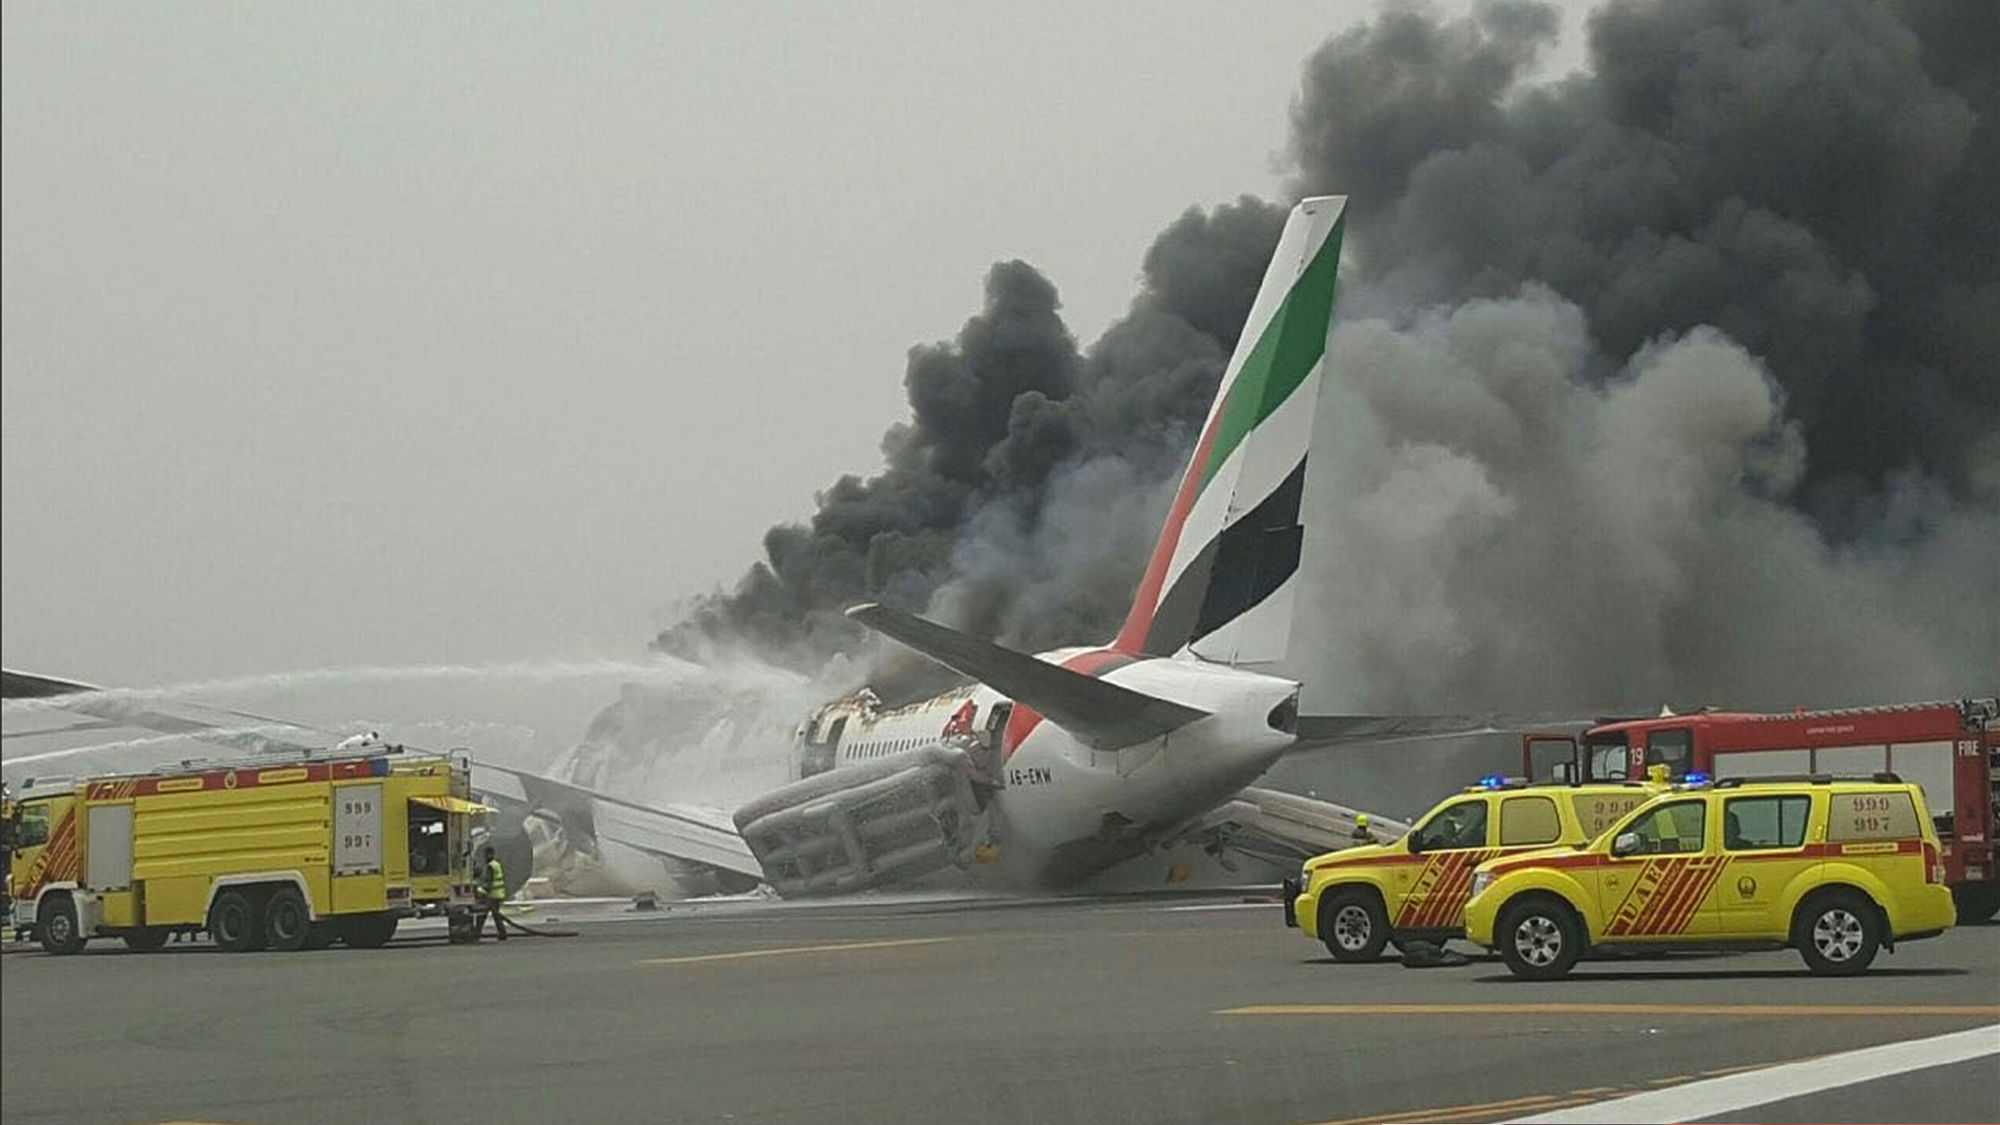 Smoke rising after an Emirates flight from Thiruvananthapuram crash landed at Dubai International Airport on Wednesday. (Photo: Twitter.com/shukla_tarun)